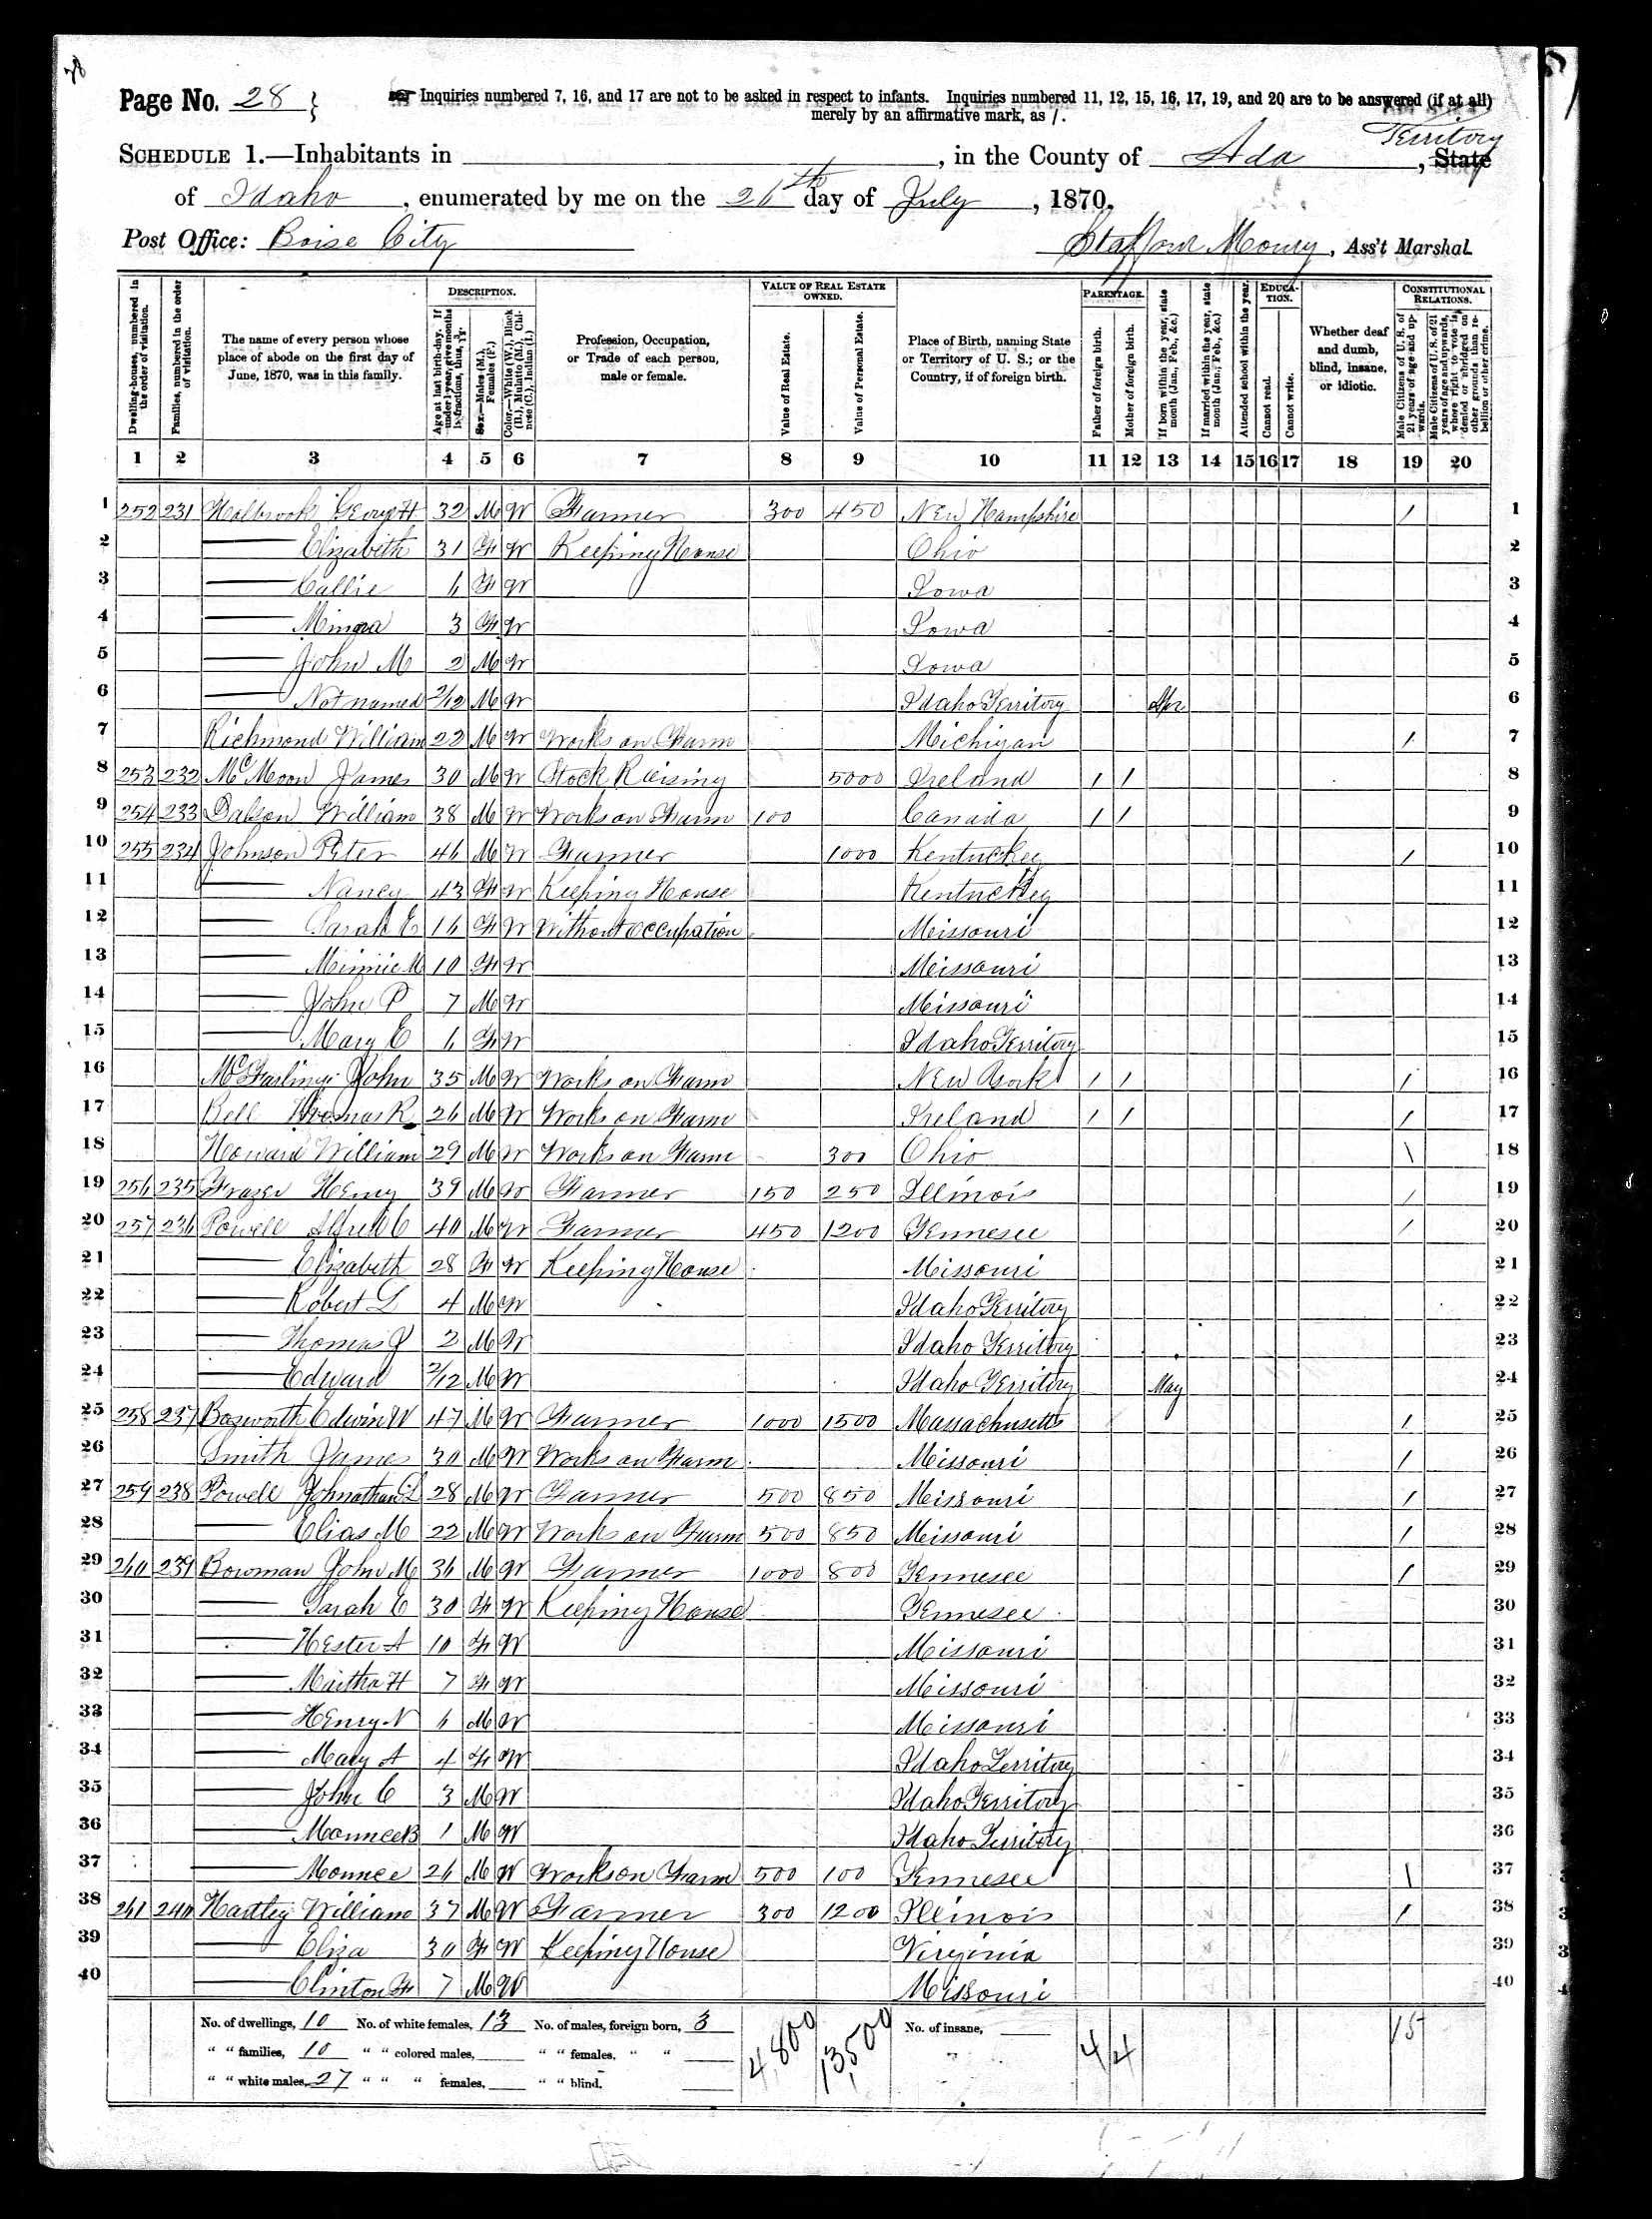 William C. Hartley, 1870 Ada County, Idaho Territory, census